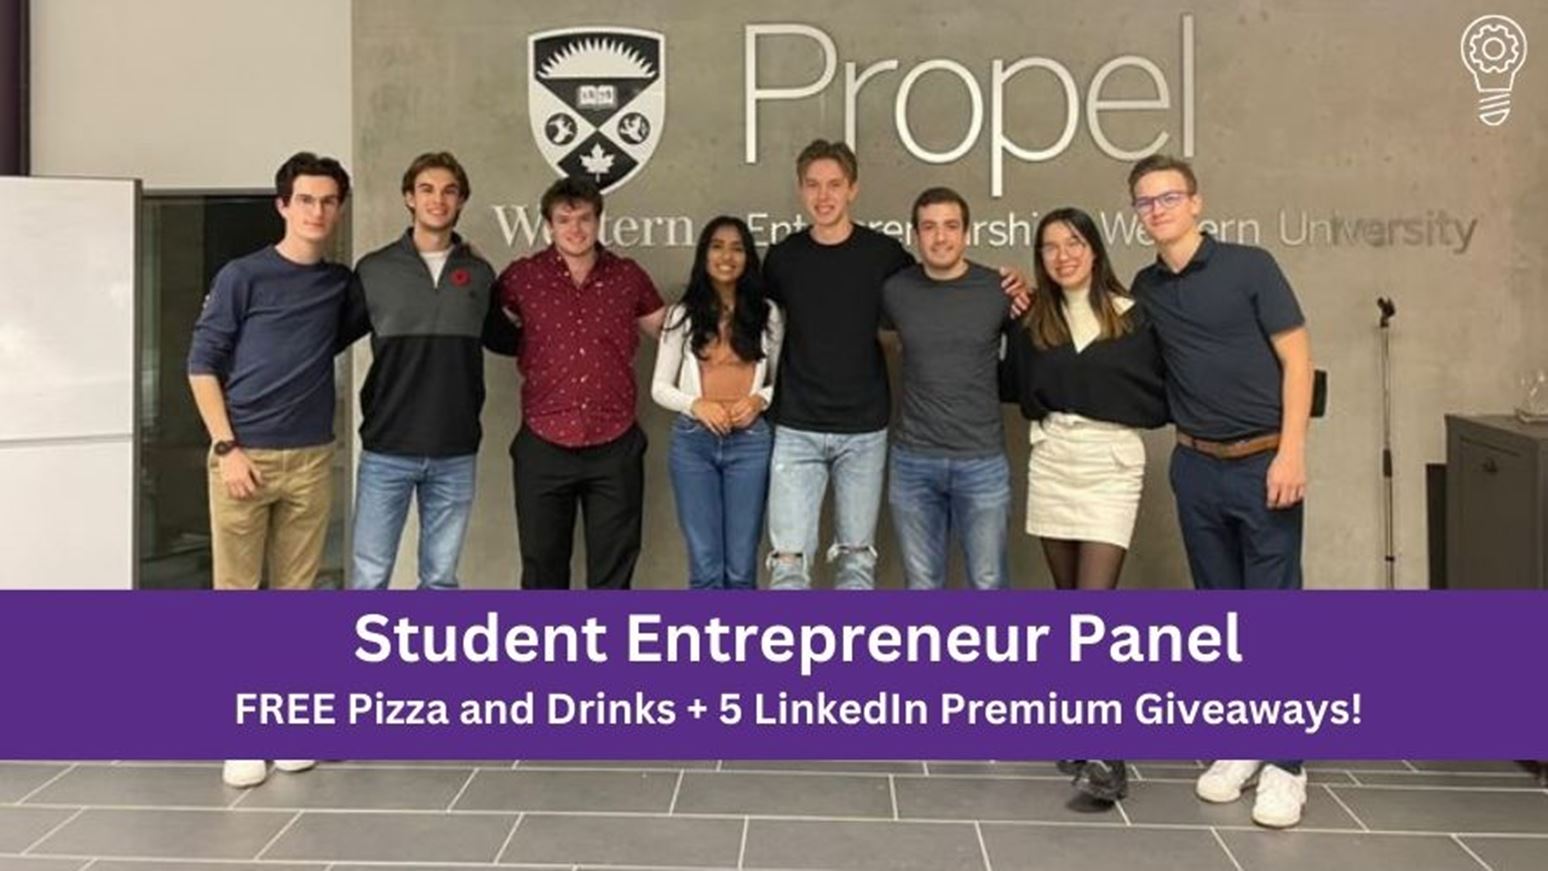 Western Egineering Student Entrepreneur Panel